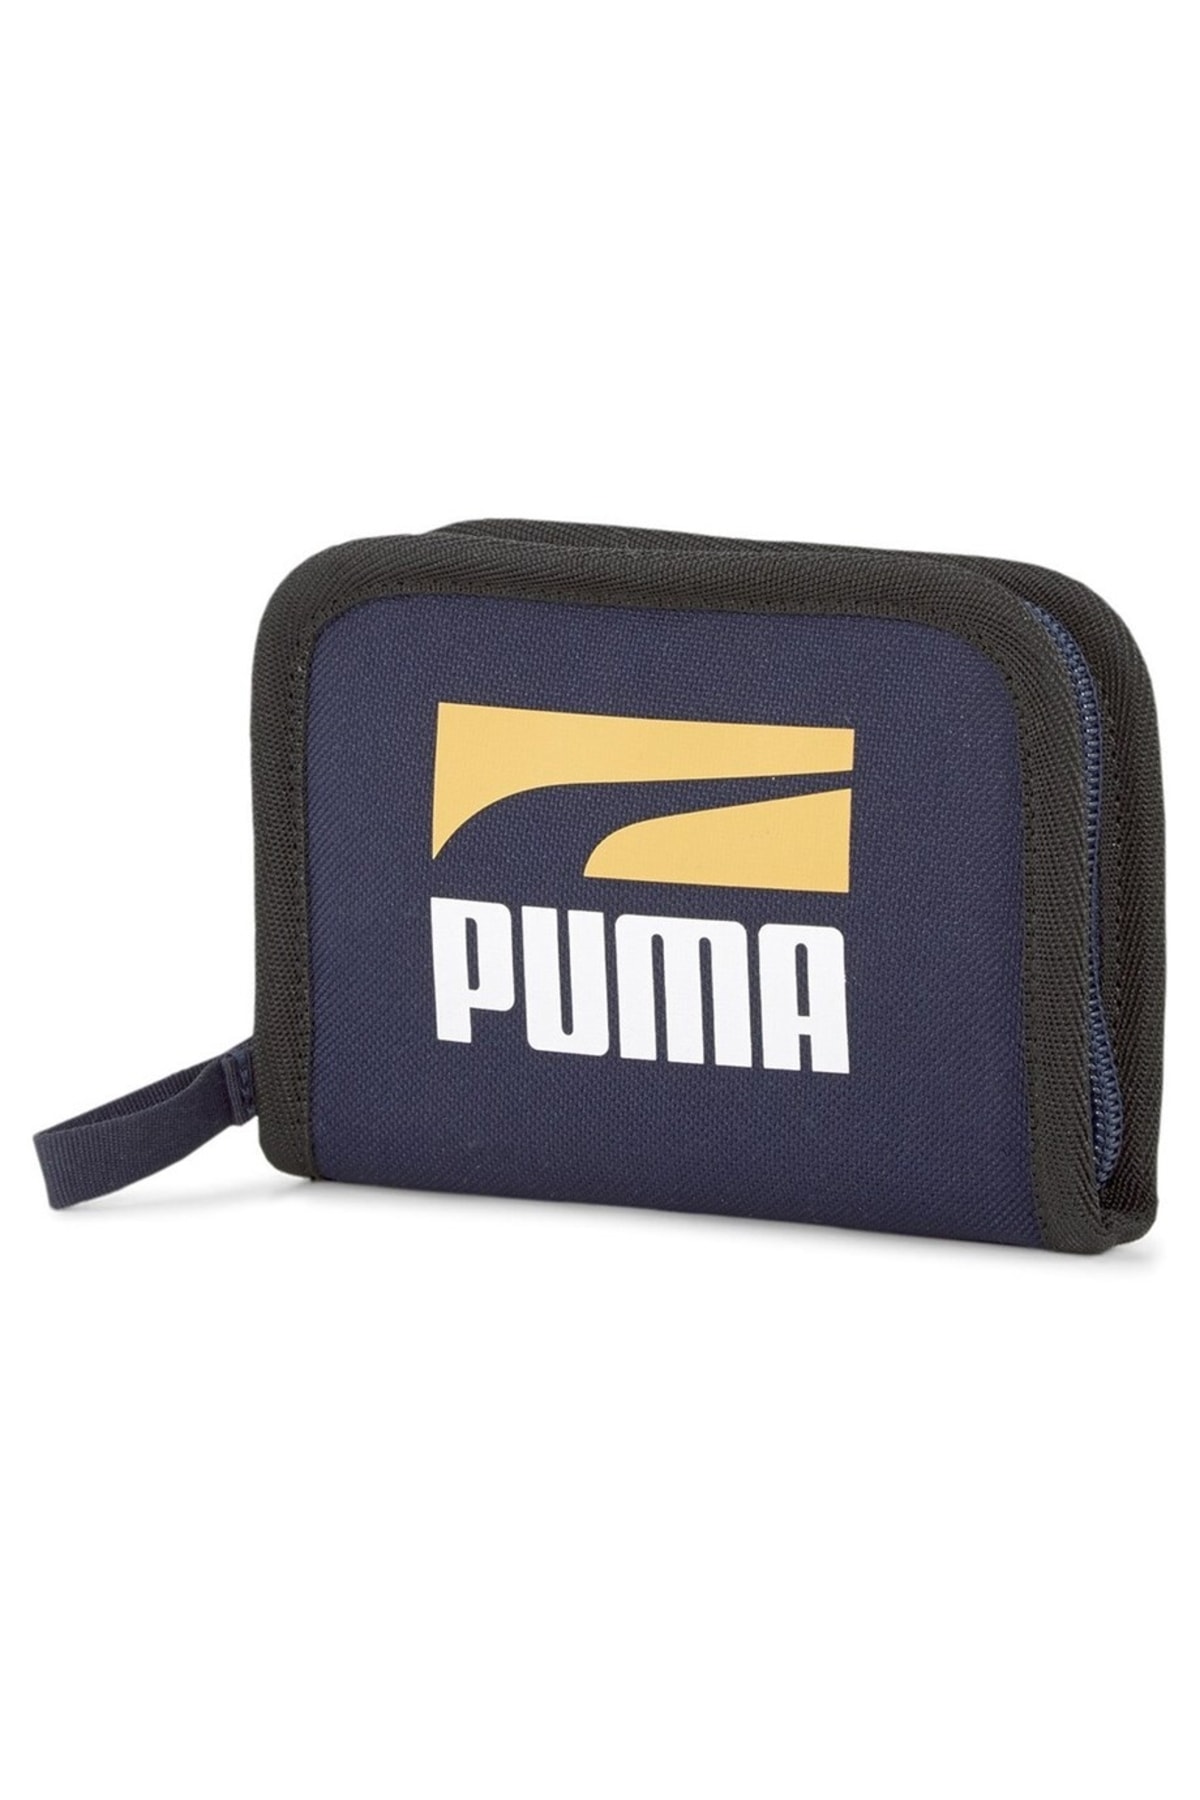 Puma Plus Wallet Iı Peacoat